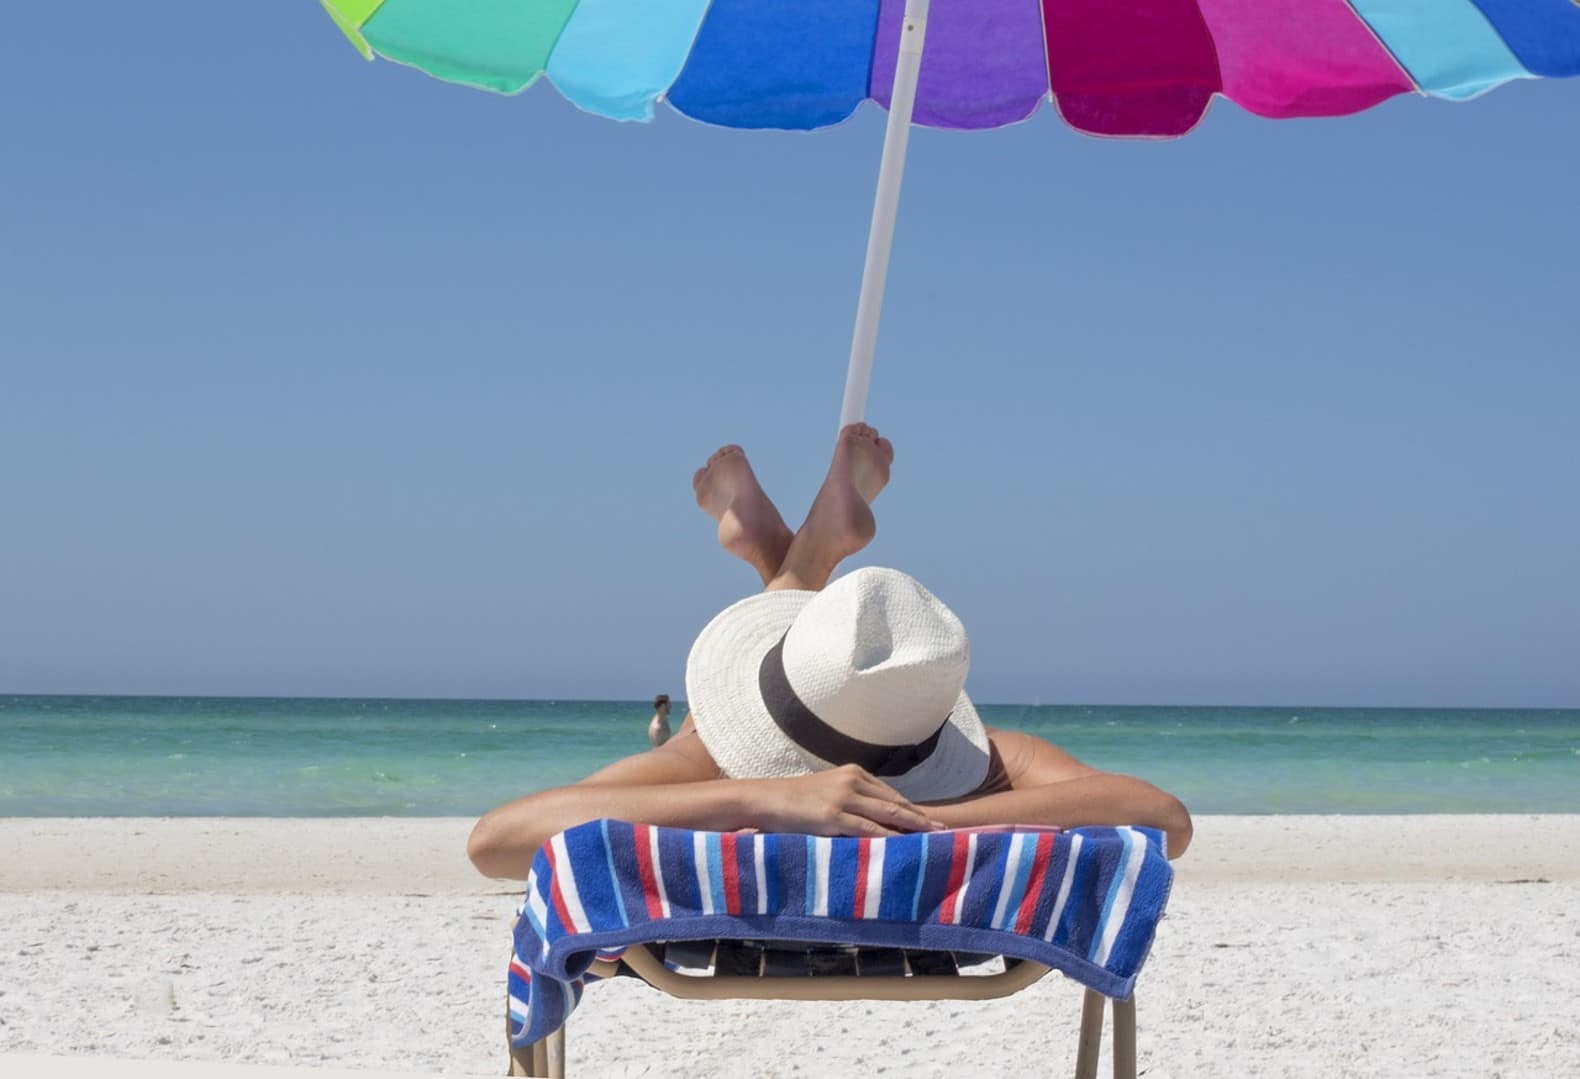 Lazing on a white-sand beach in Florida looks like heaven